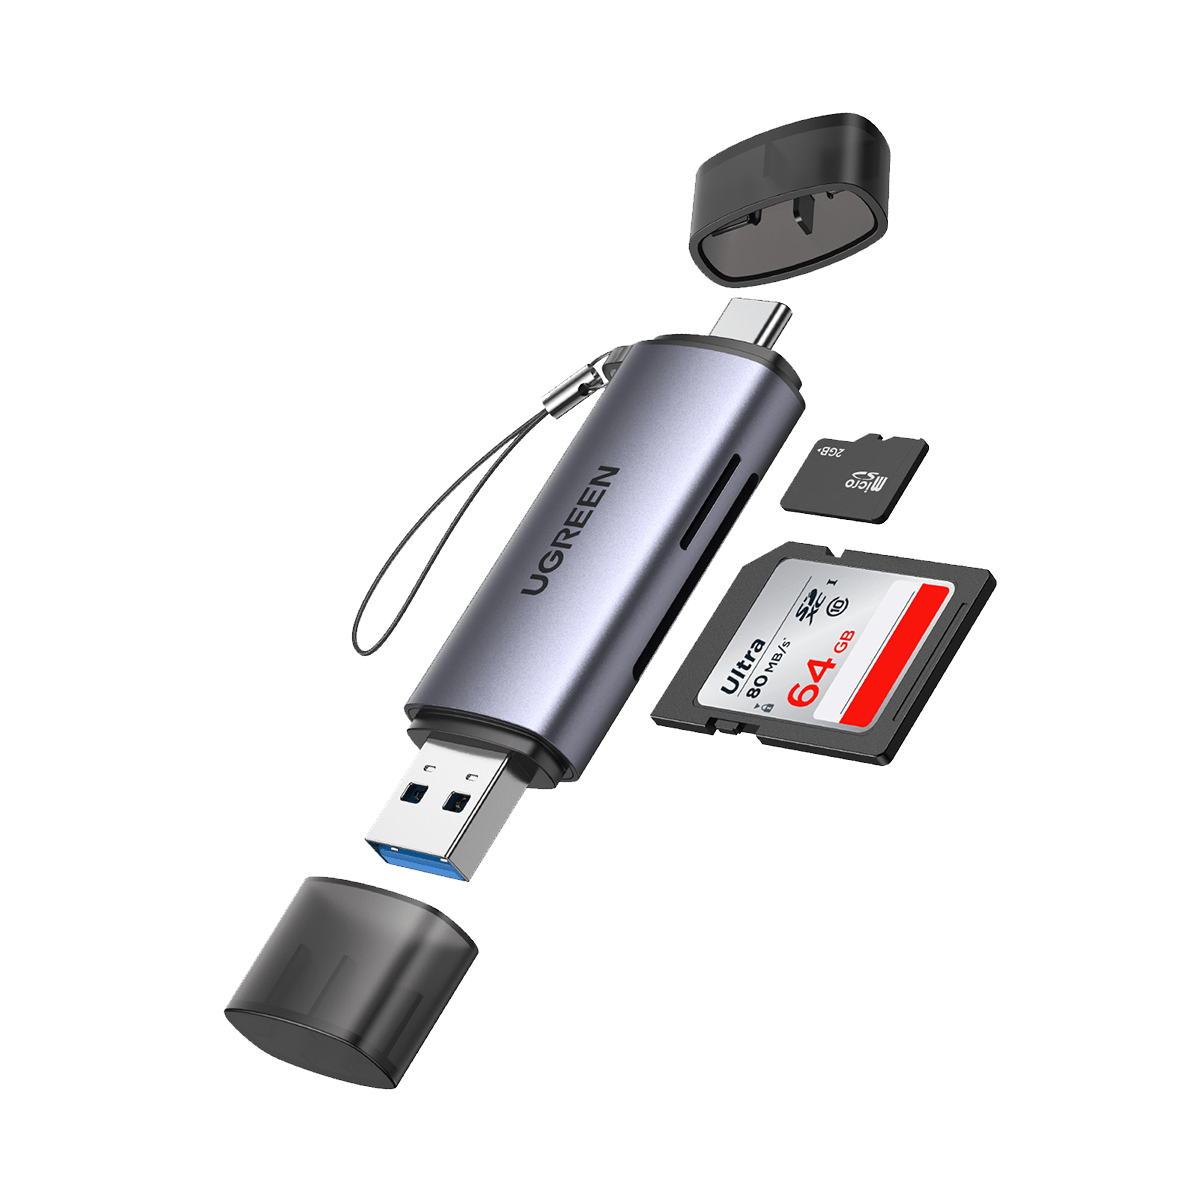 Rankie Adaptador USB C a USB 3,0, Función de OTG, Compatible